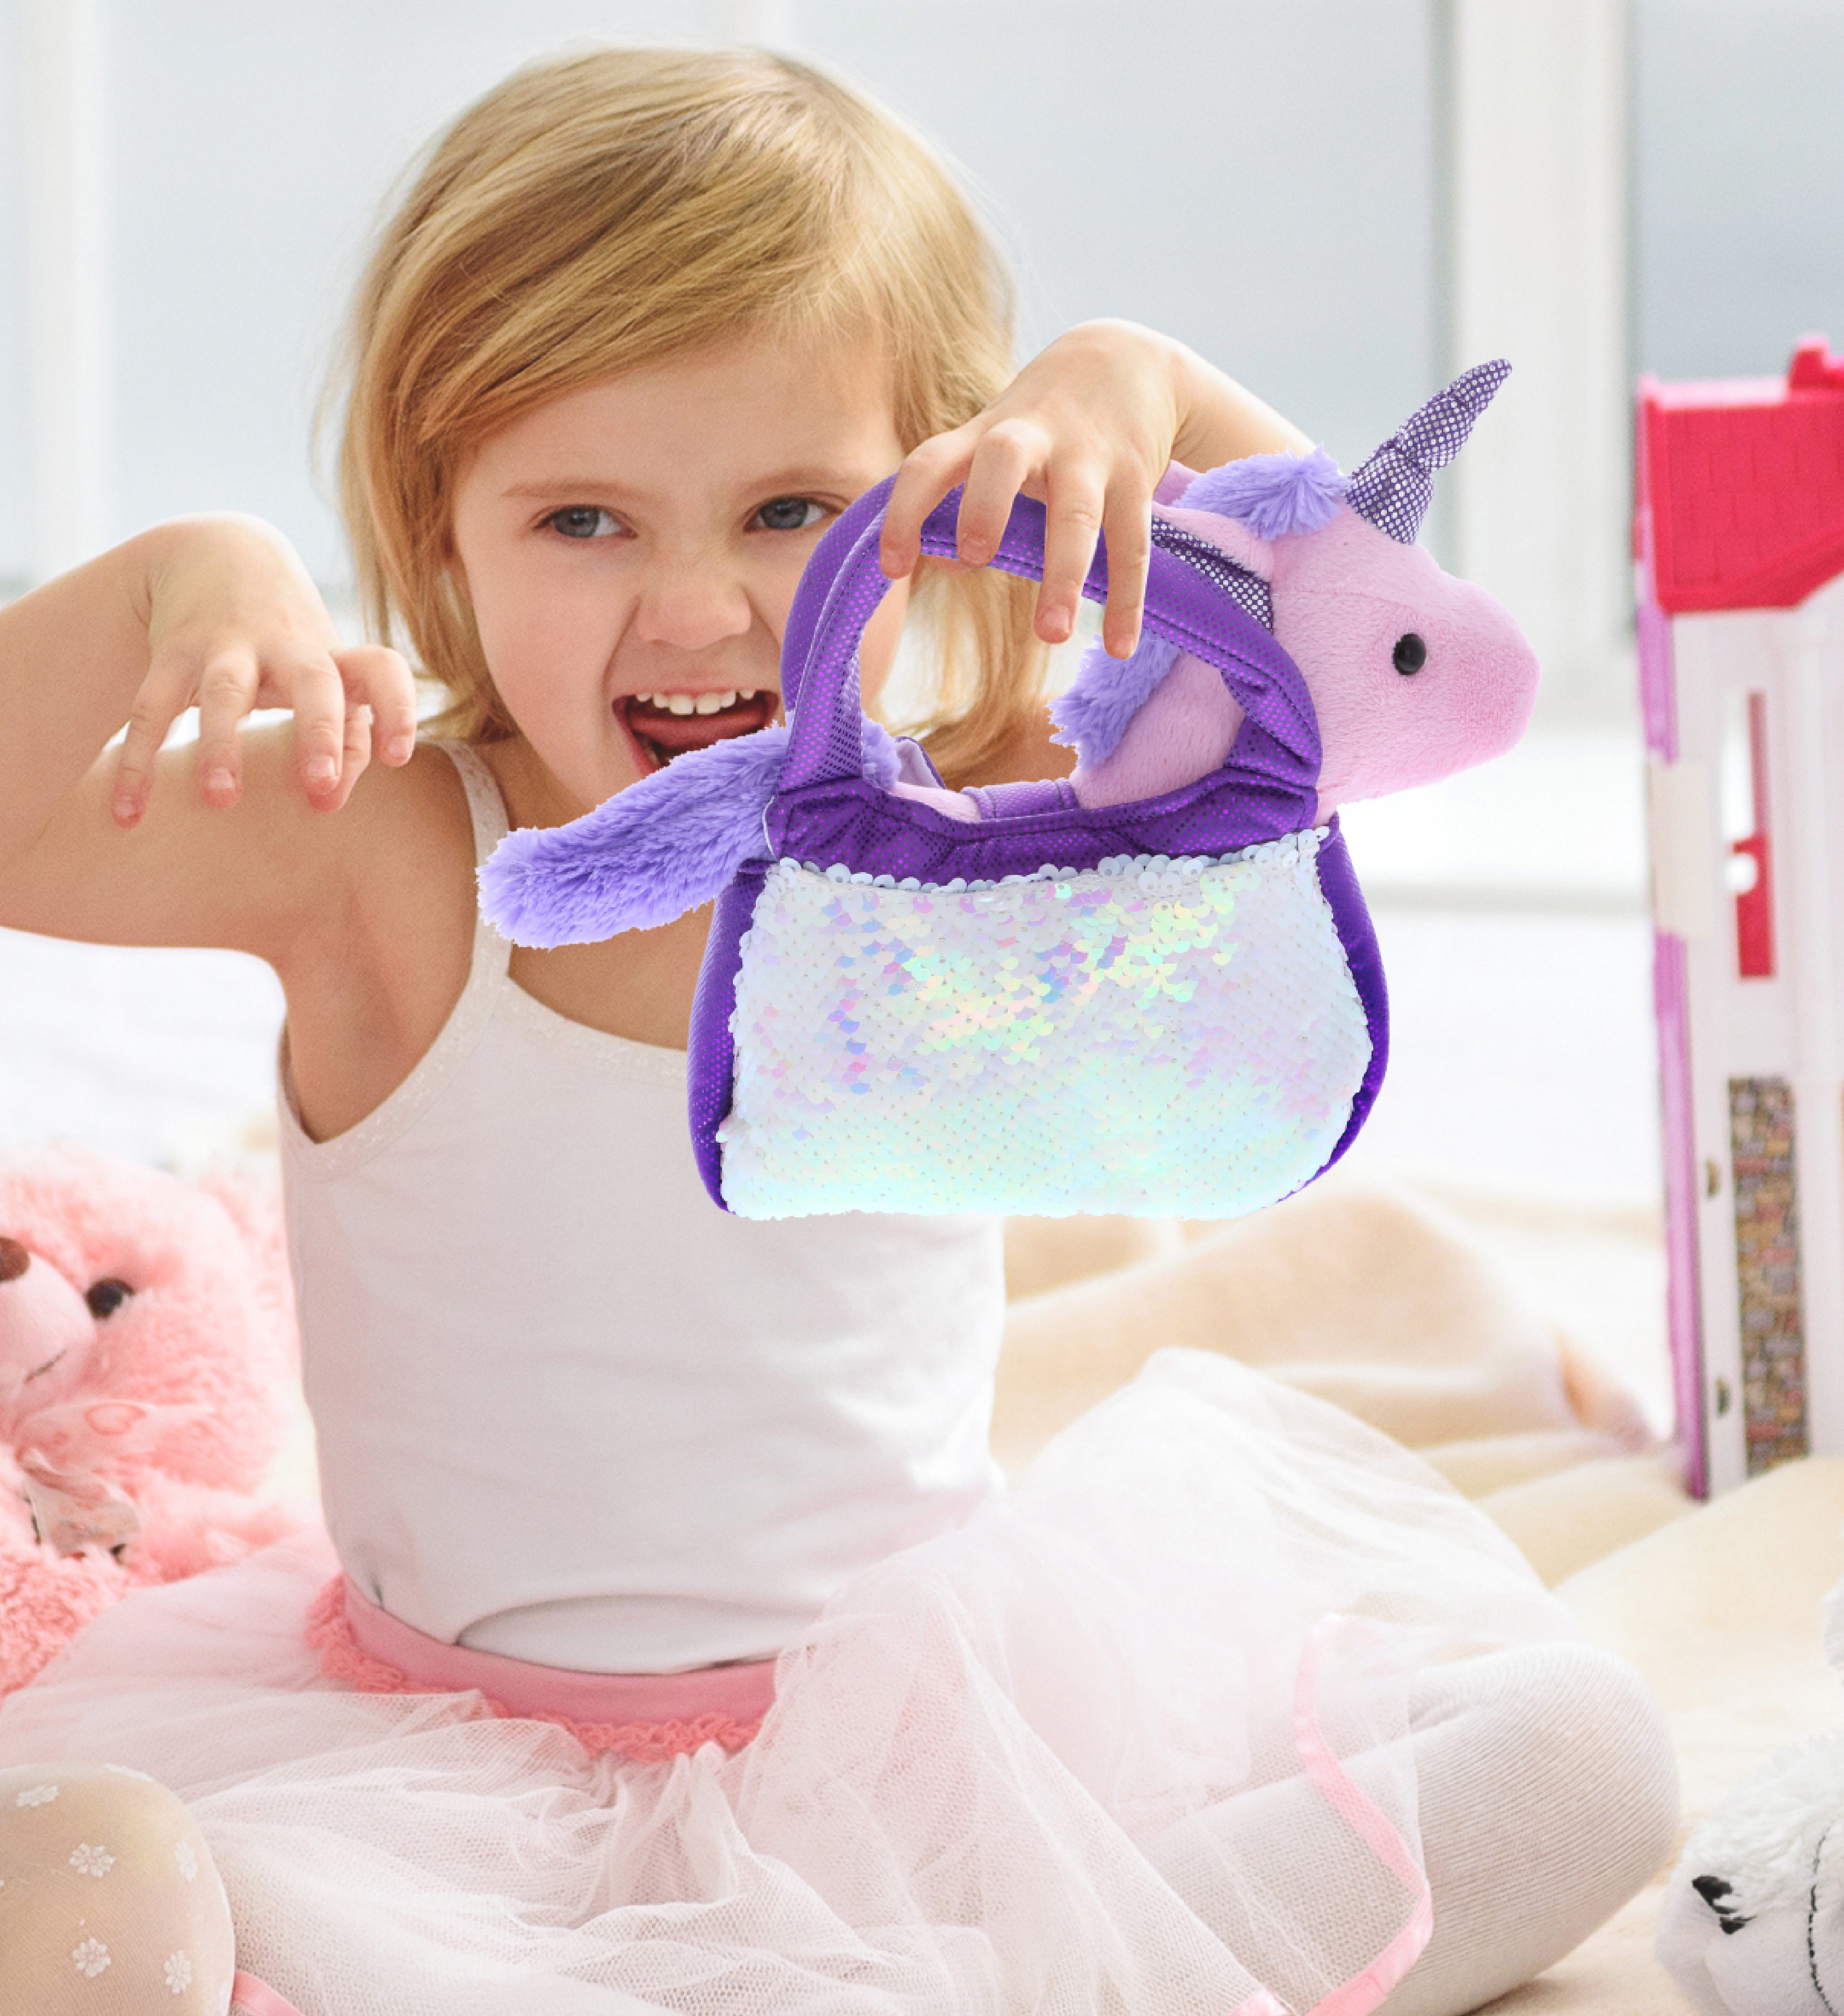 Kids Unicorn Horse Purse Bag Toddler Girl Toy Play Set Plush Stuffed Animal New 